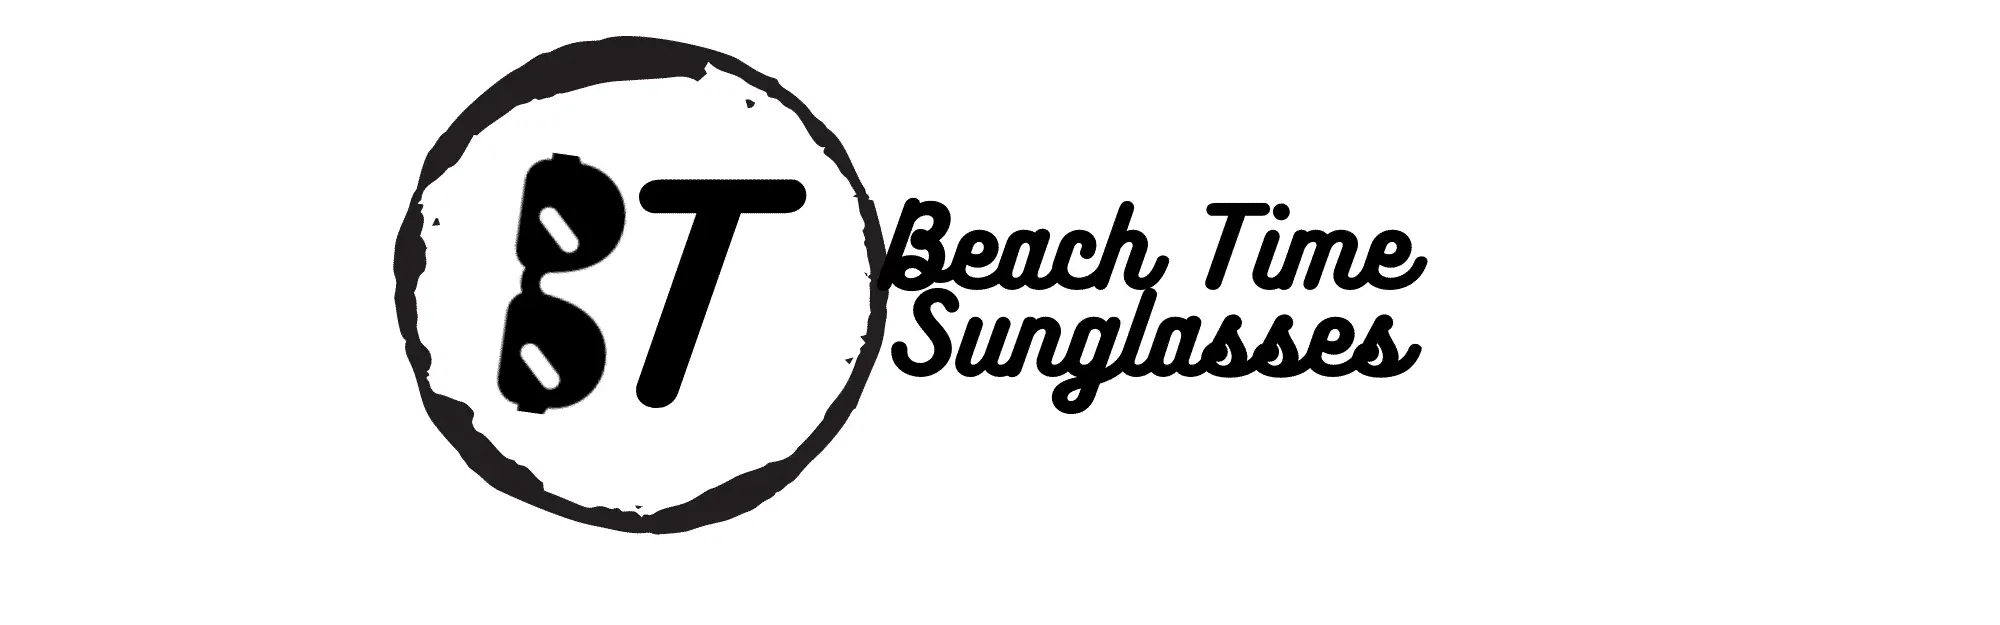 Beach Time Sunglasses